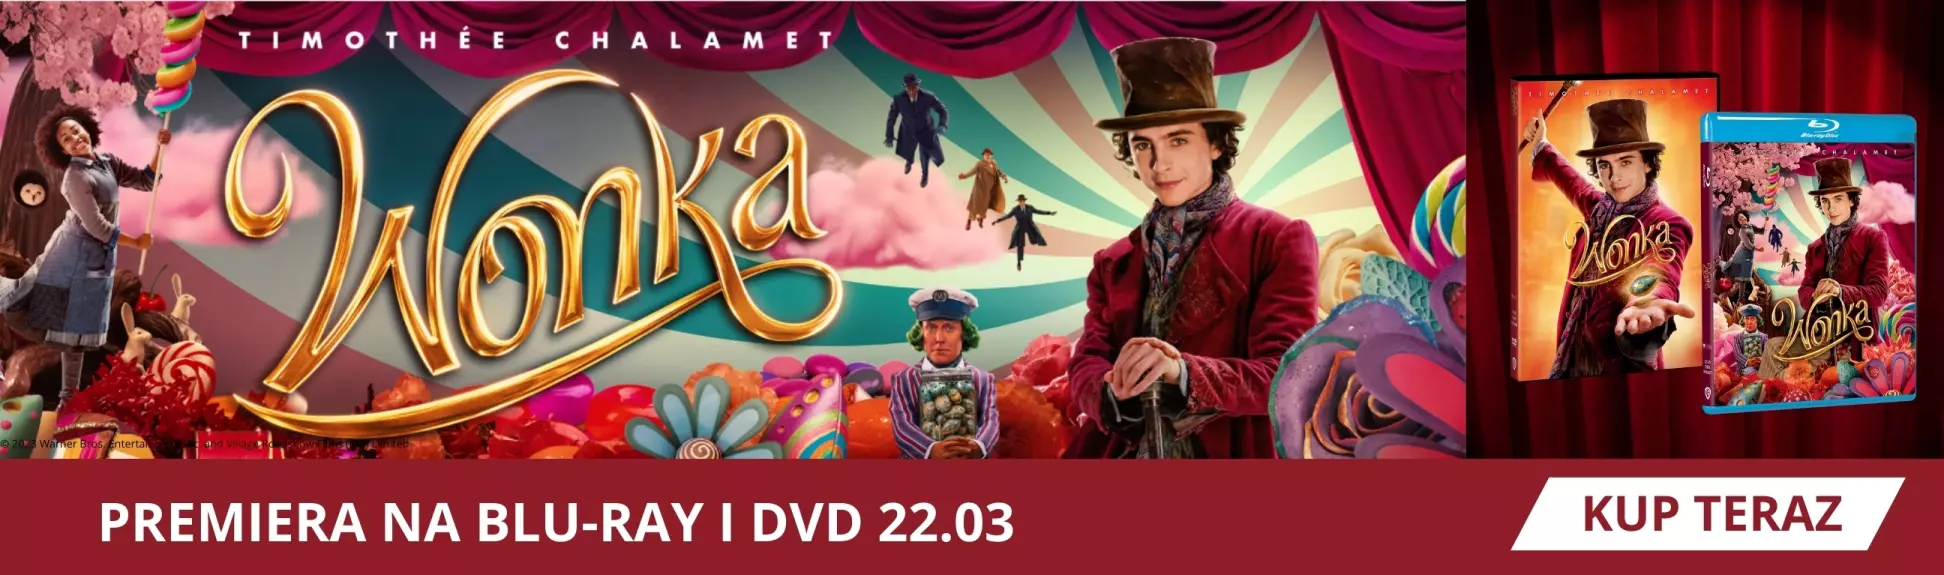 "Wonka" premiera na DVD i Blu-ray już 22 marca!